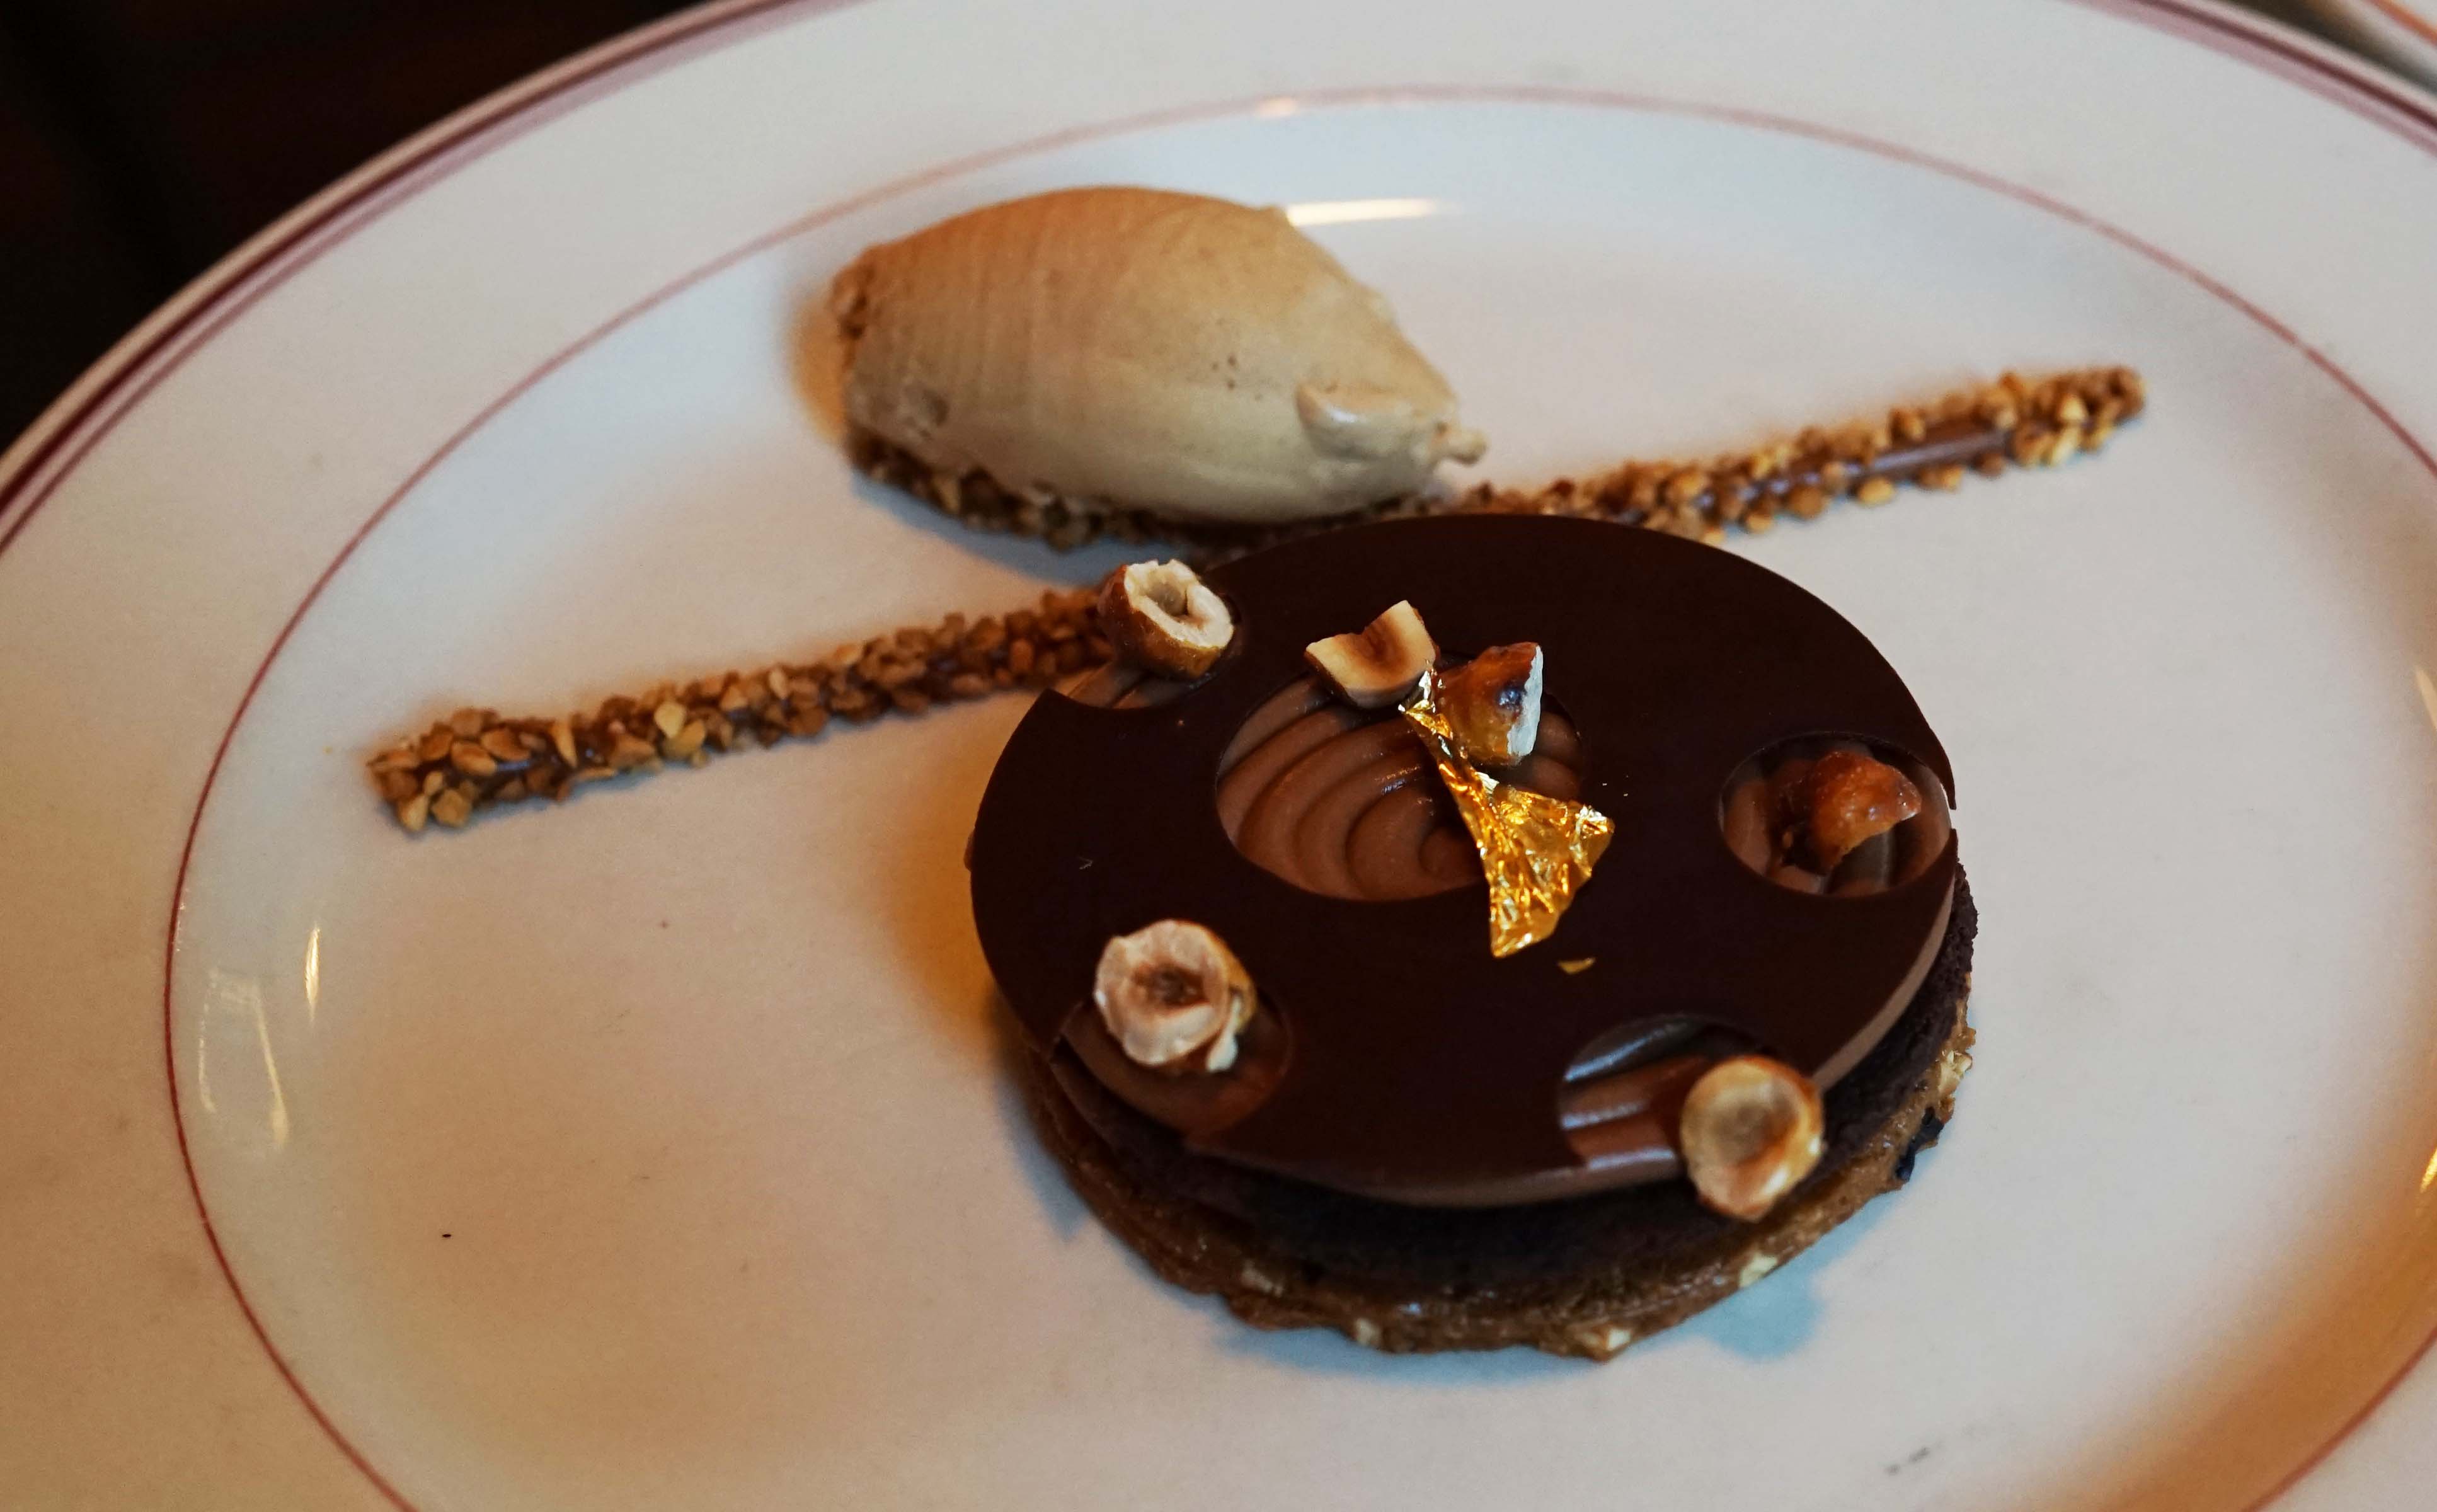 Le Diplomate chocolate wafer dessert